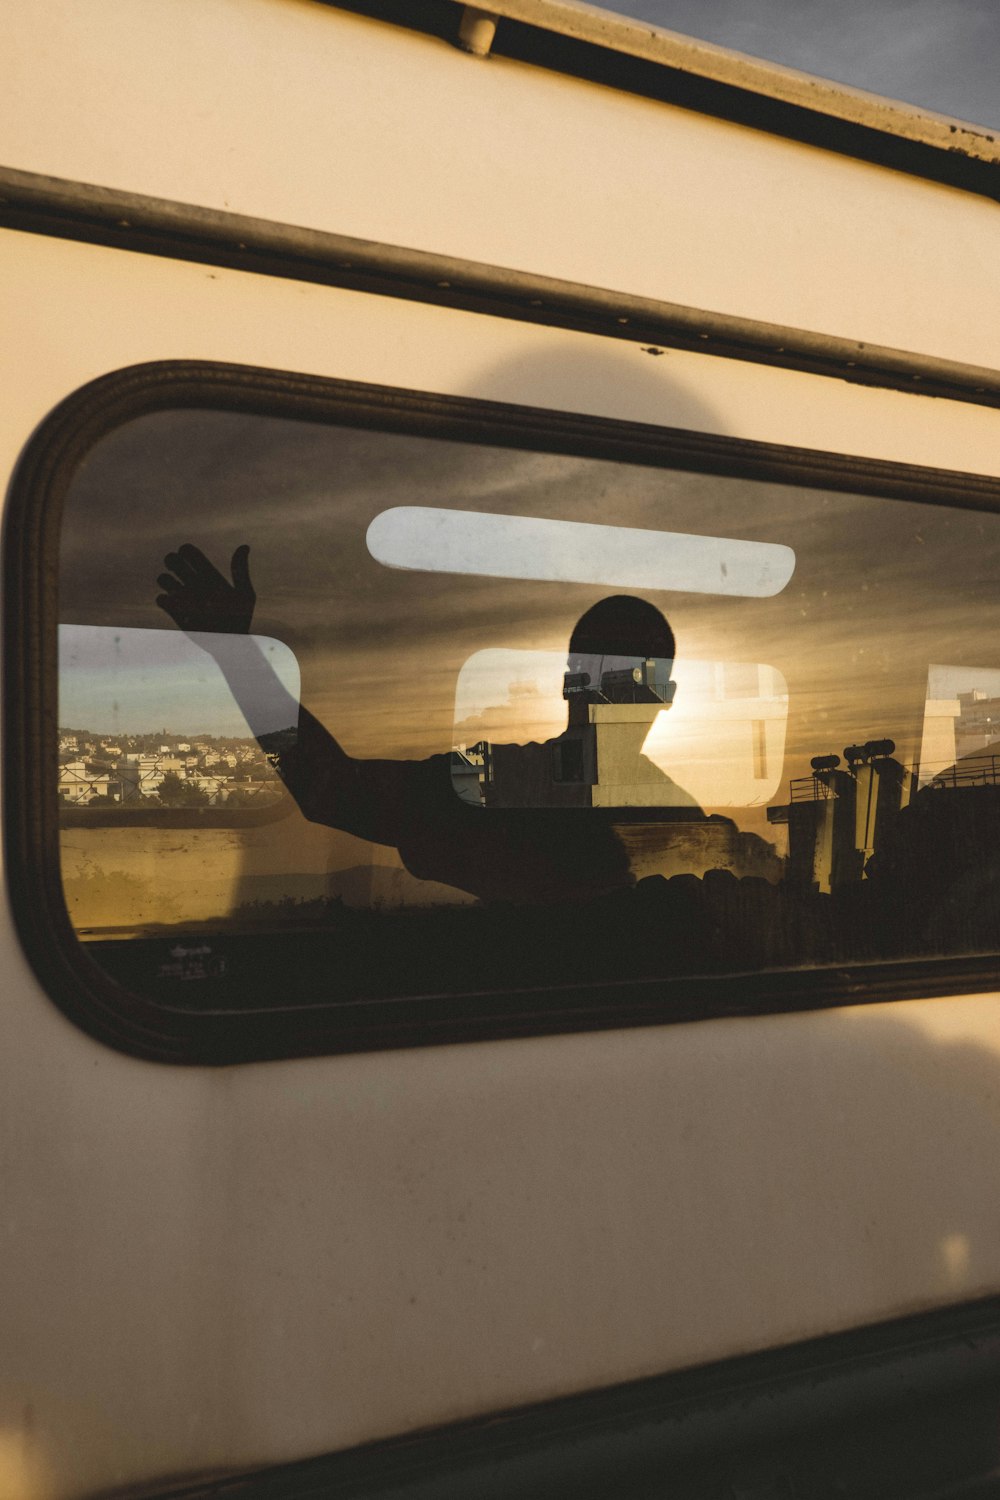 human shadow reflecting on vehicle window